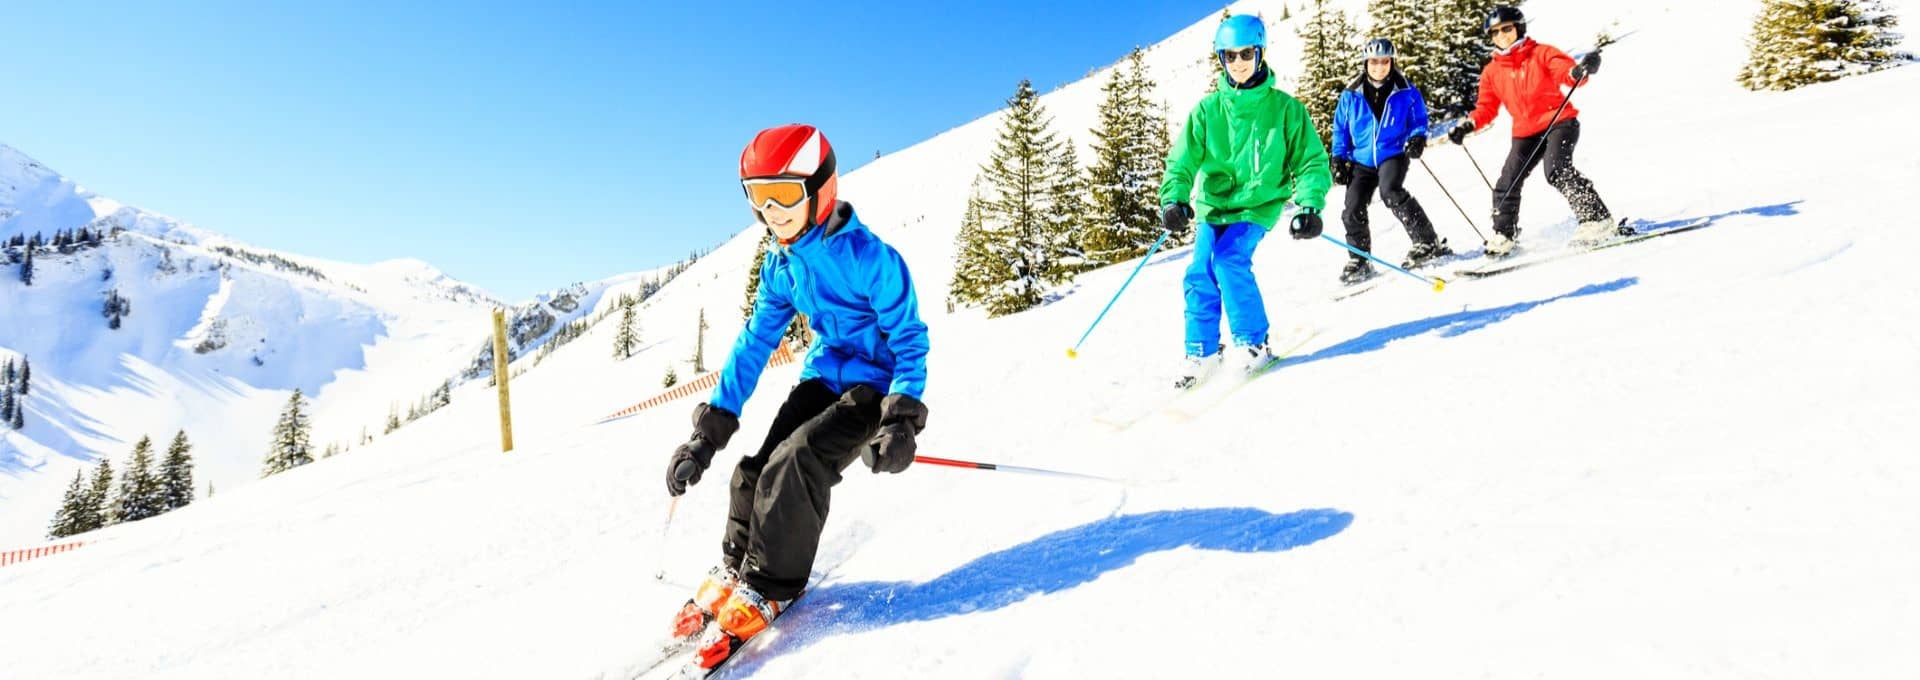 Family of four skiing at ski resort.